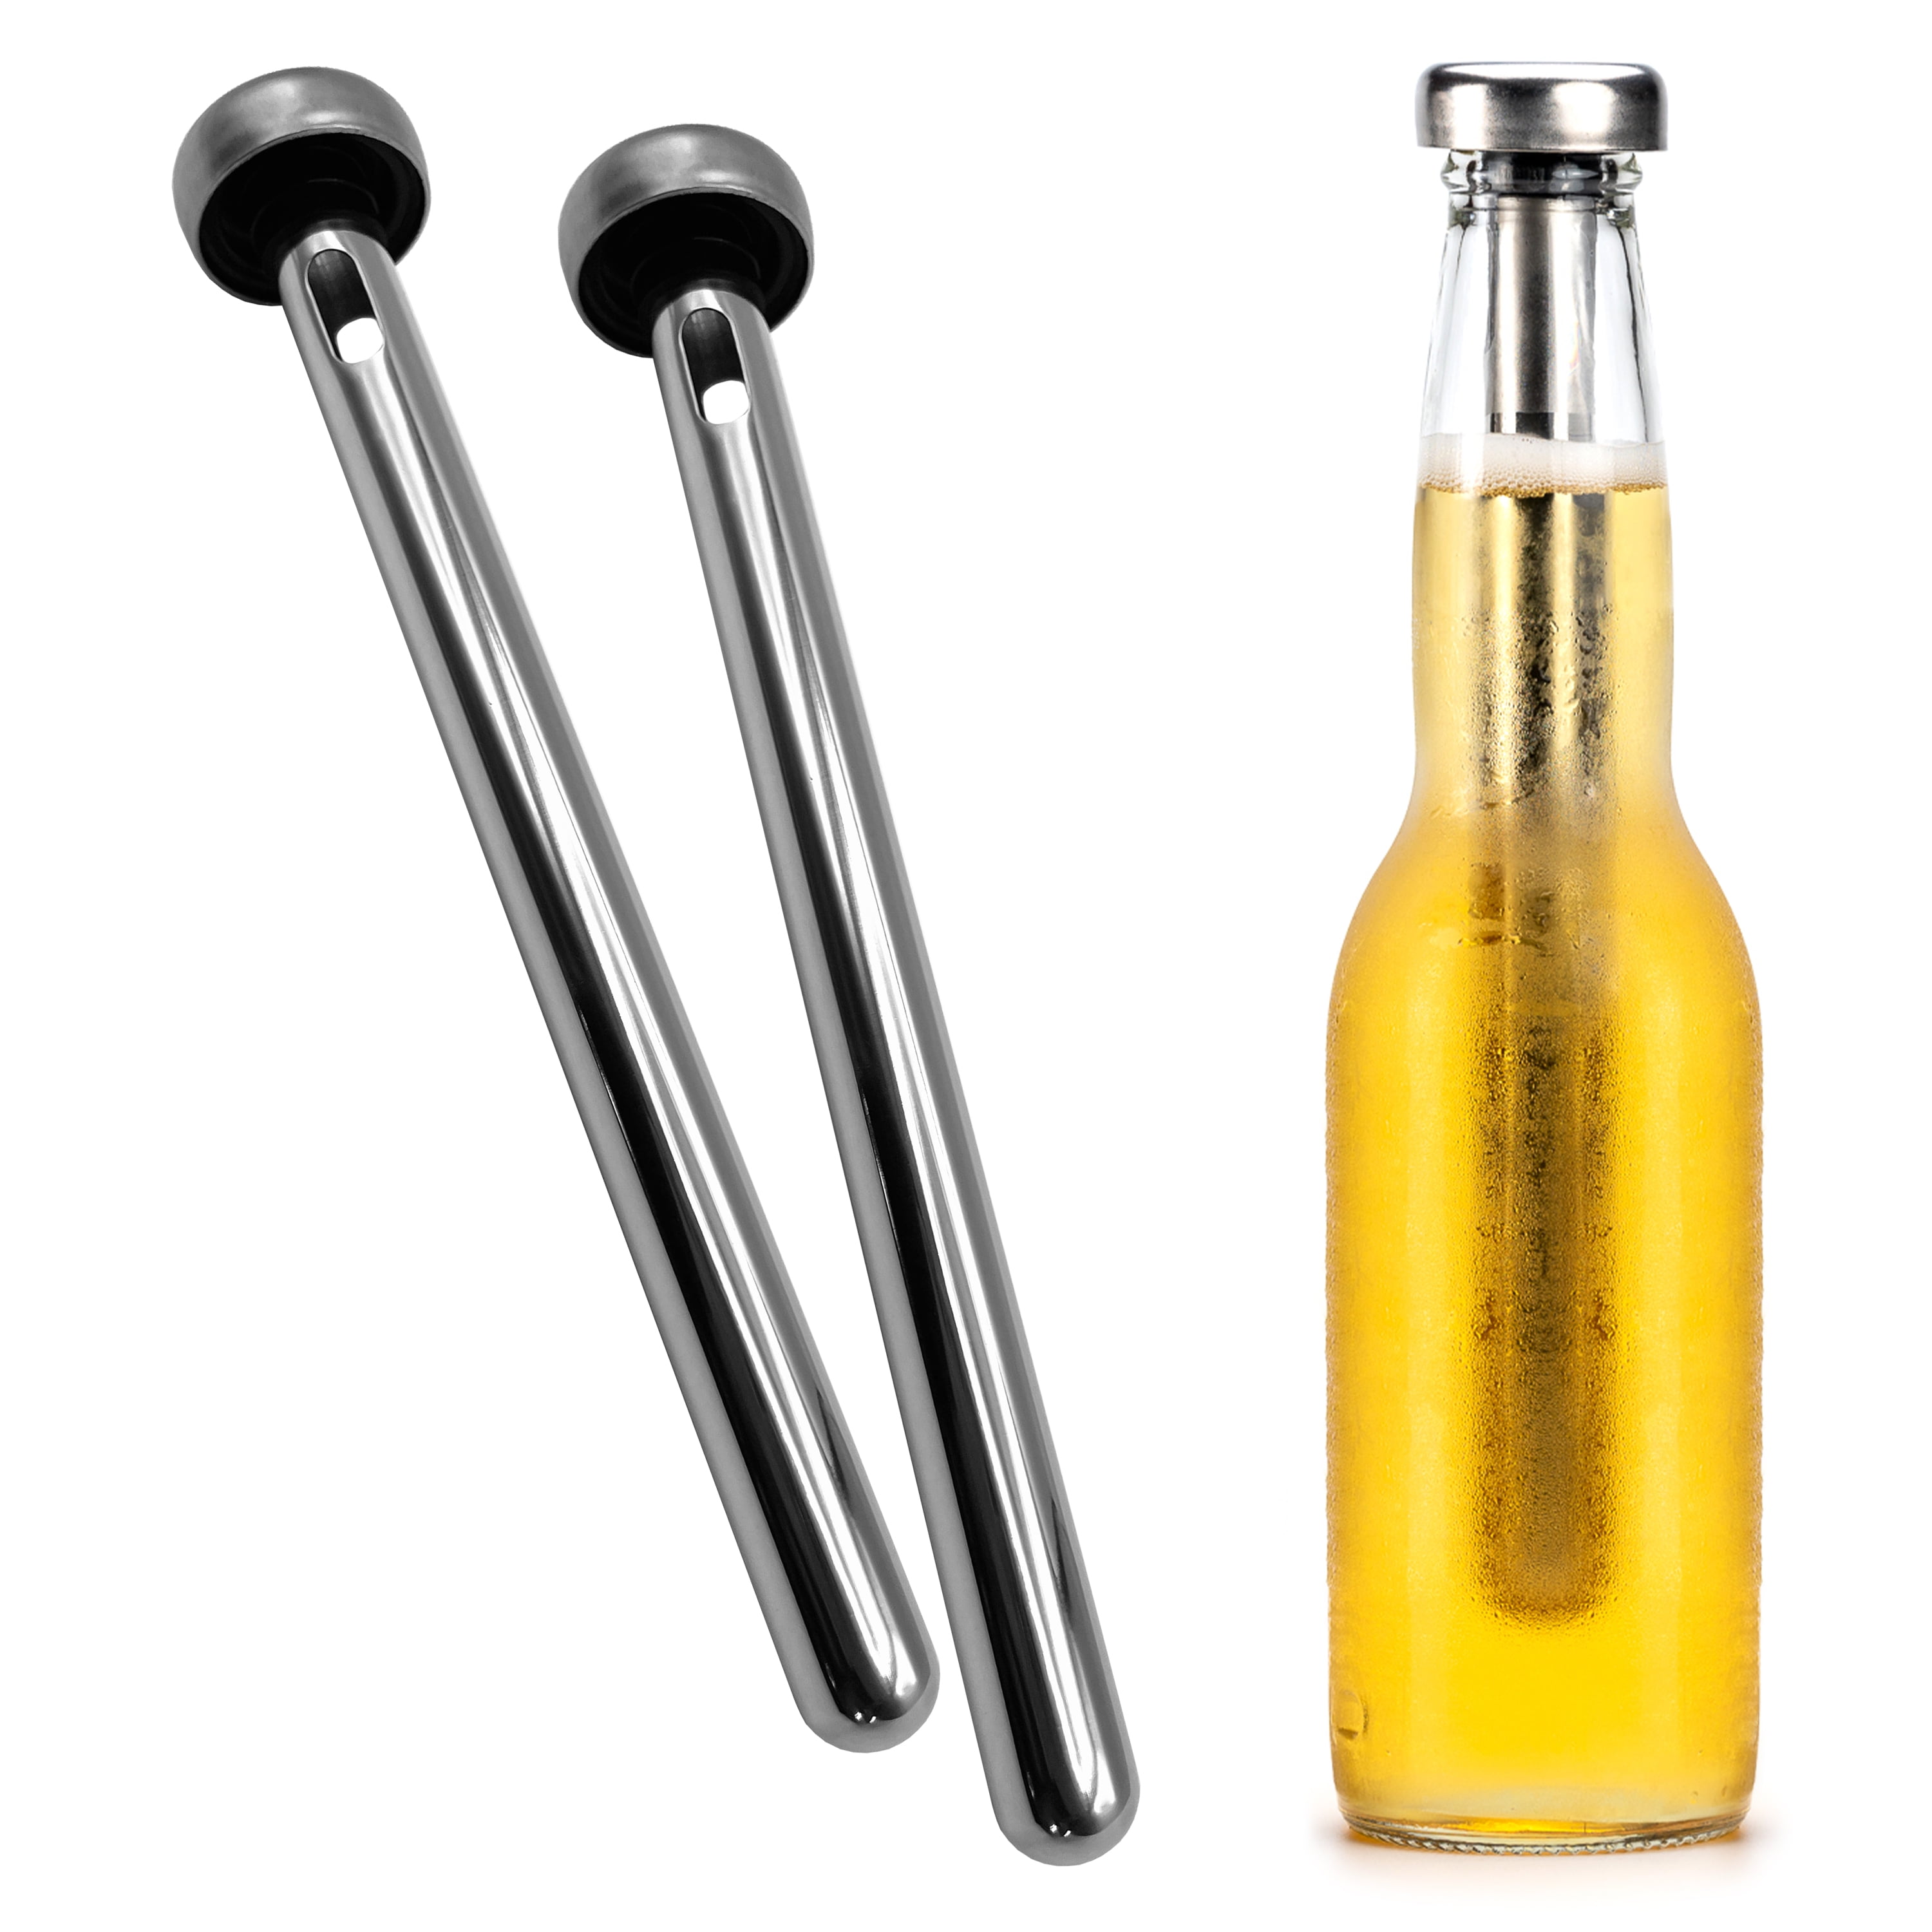 Beer Chiller Stick Stainless Steel Wine Beverage Cooler Cooling Rod Kits New US 